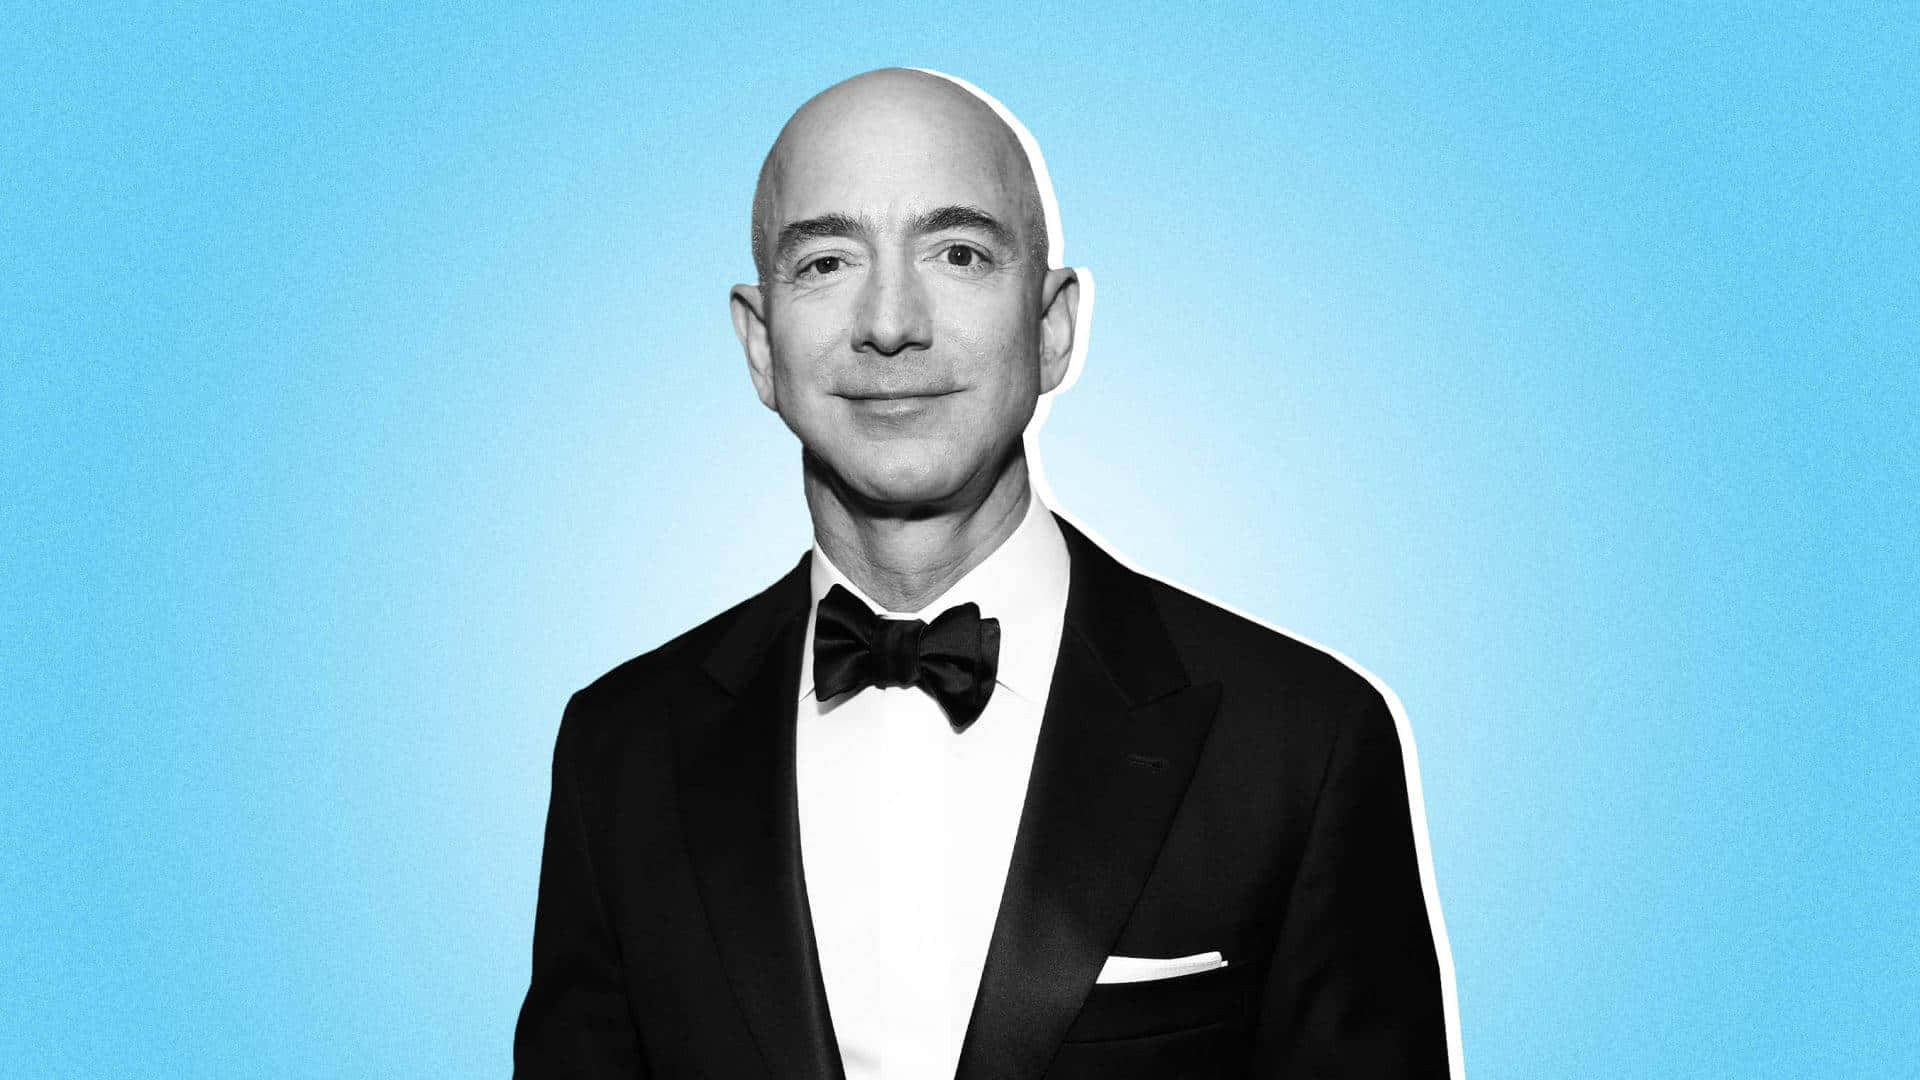 Jeff Bezos Smiling Portrait